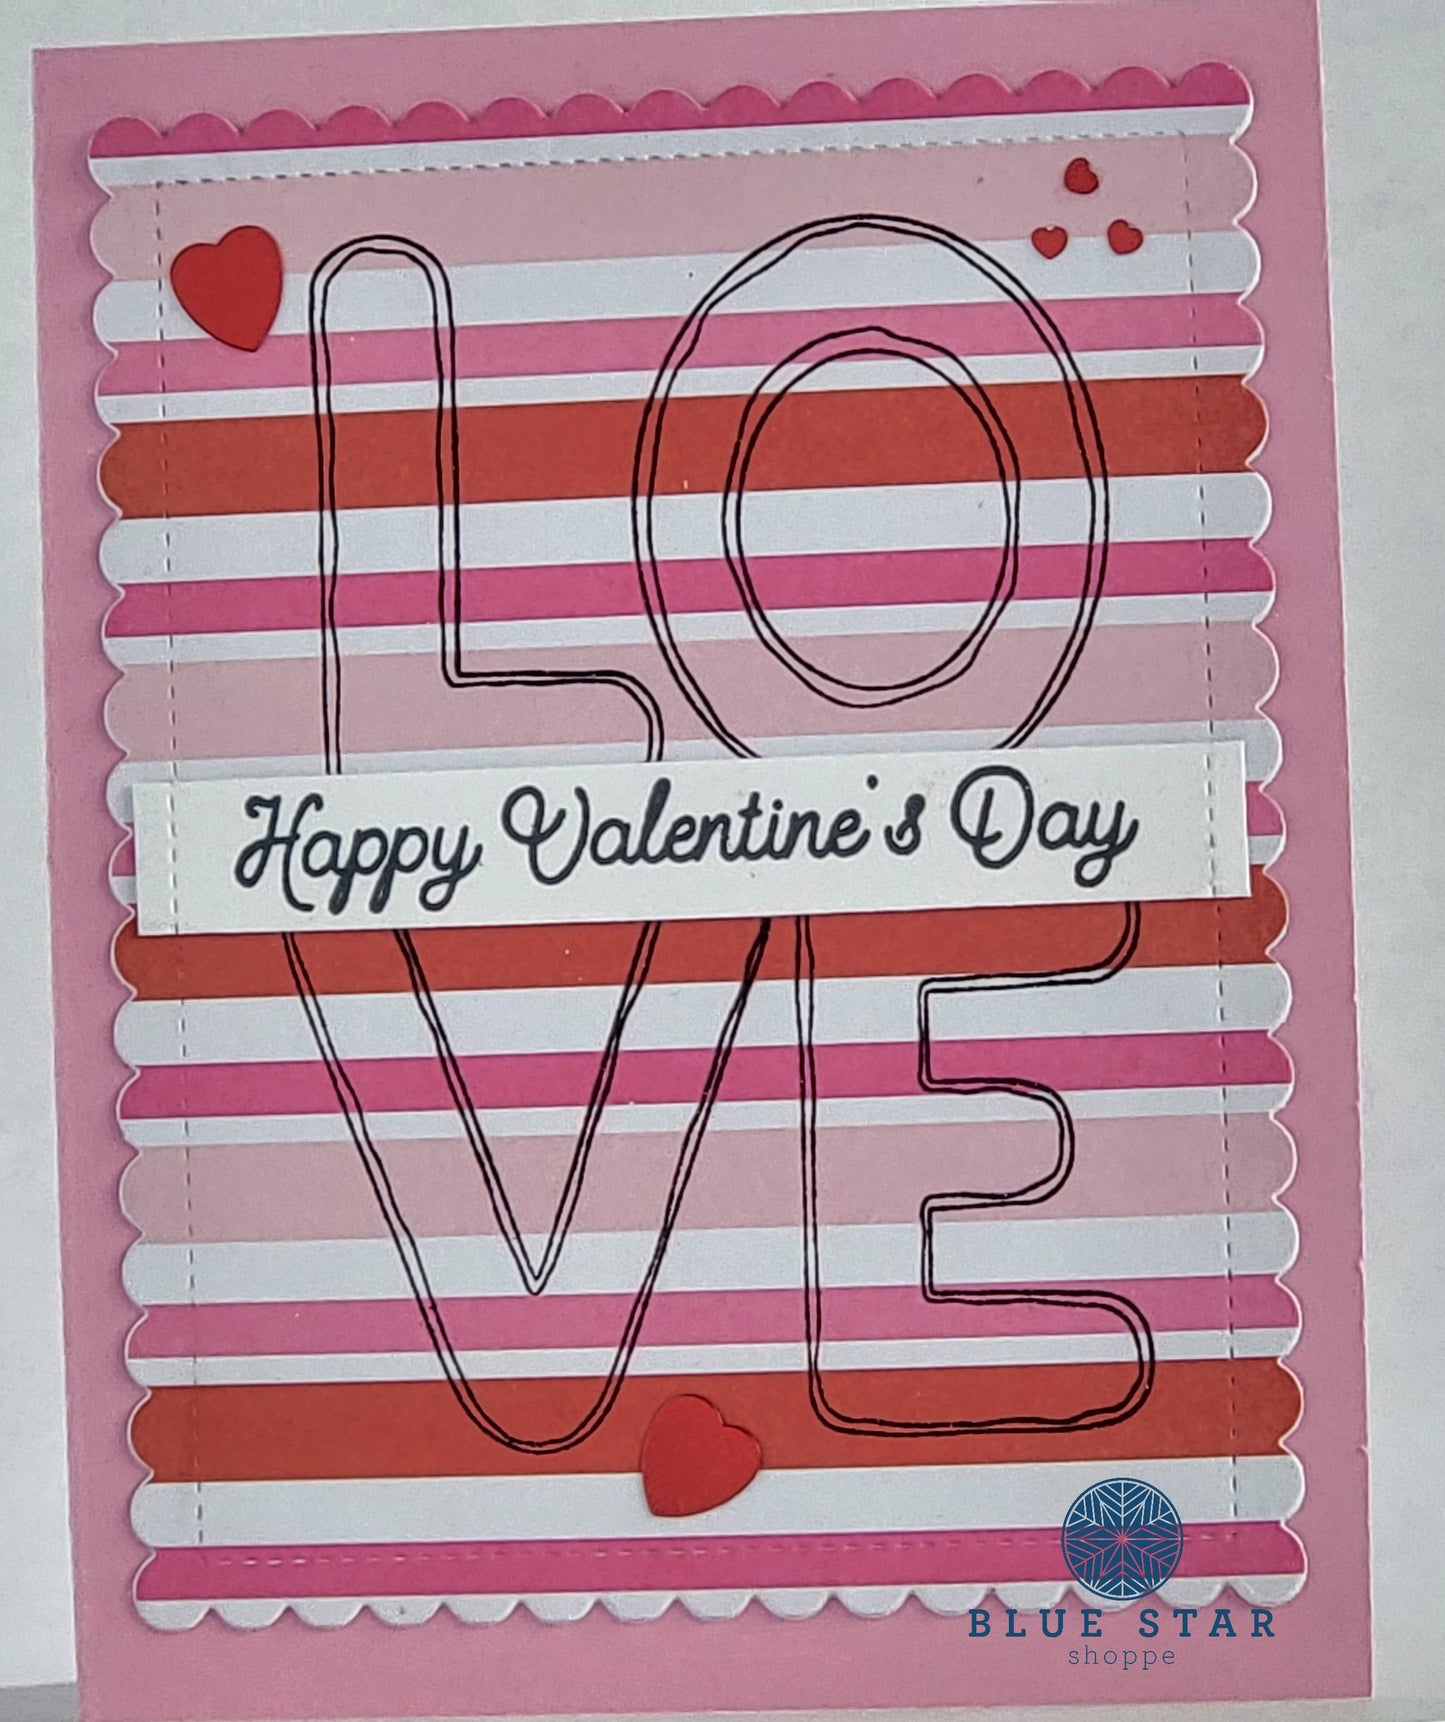 Happy Valentine's Day - Love Striped Greeting Card